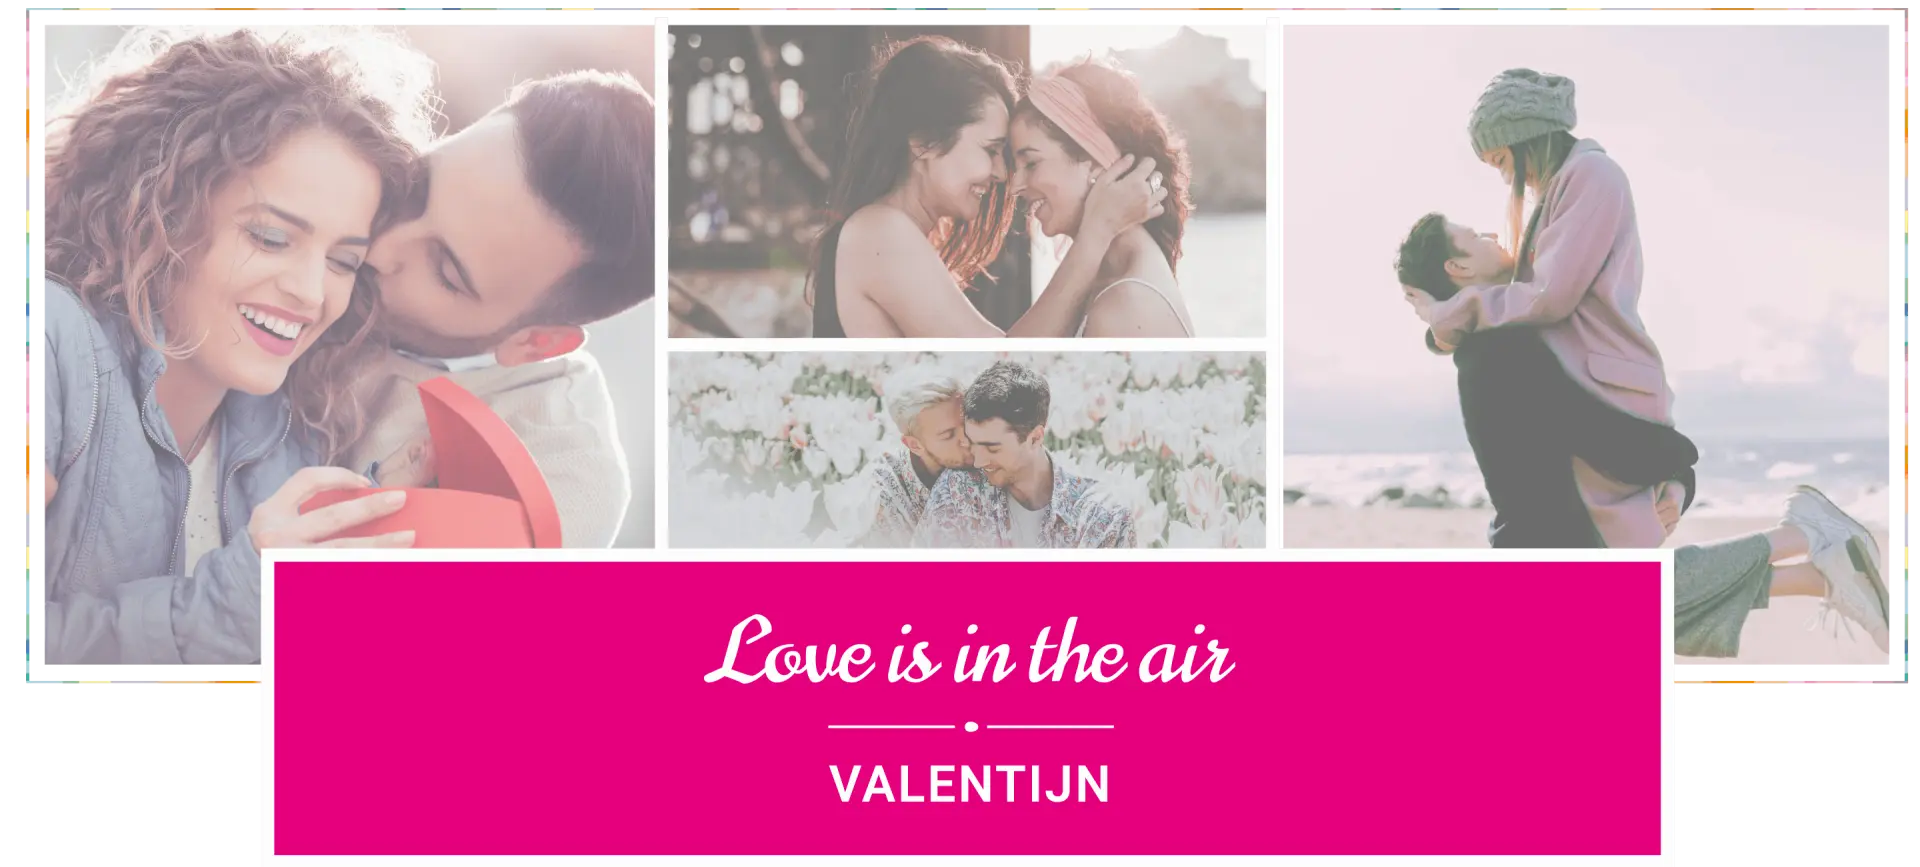 B2B banner vanparys valentijn mobile